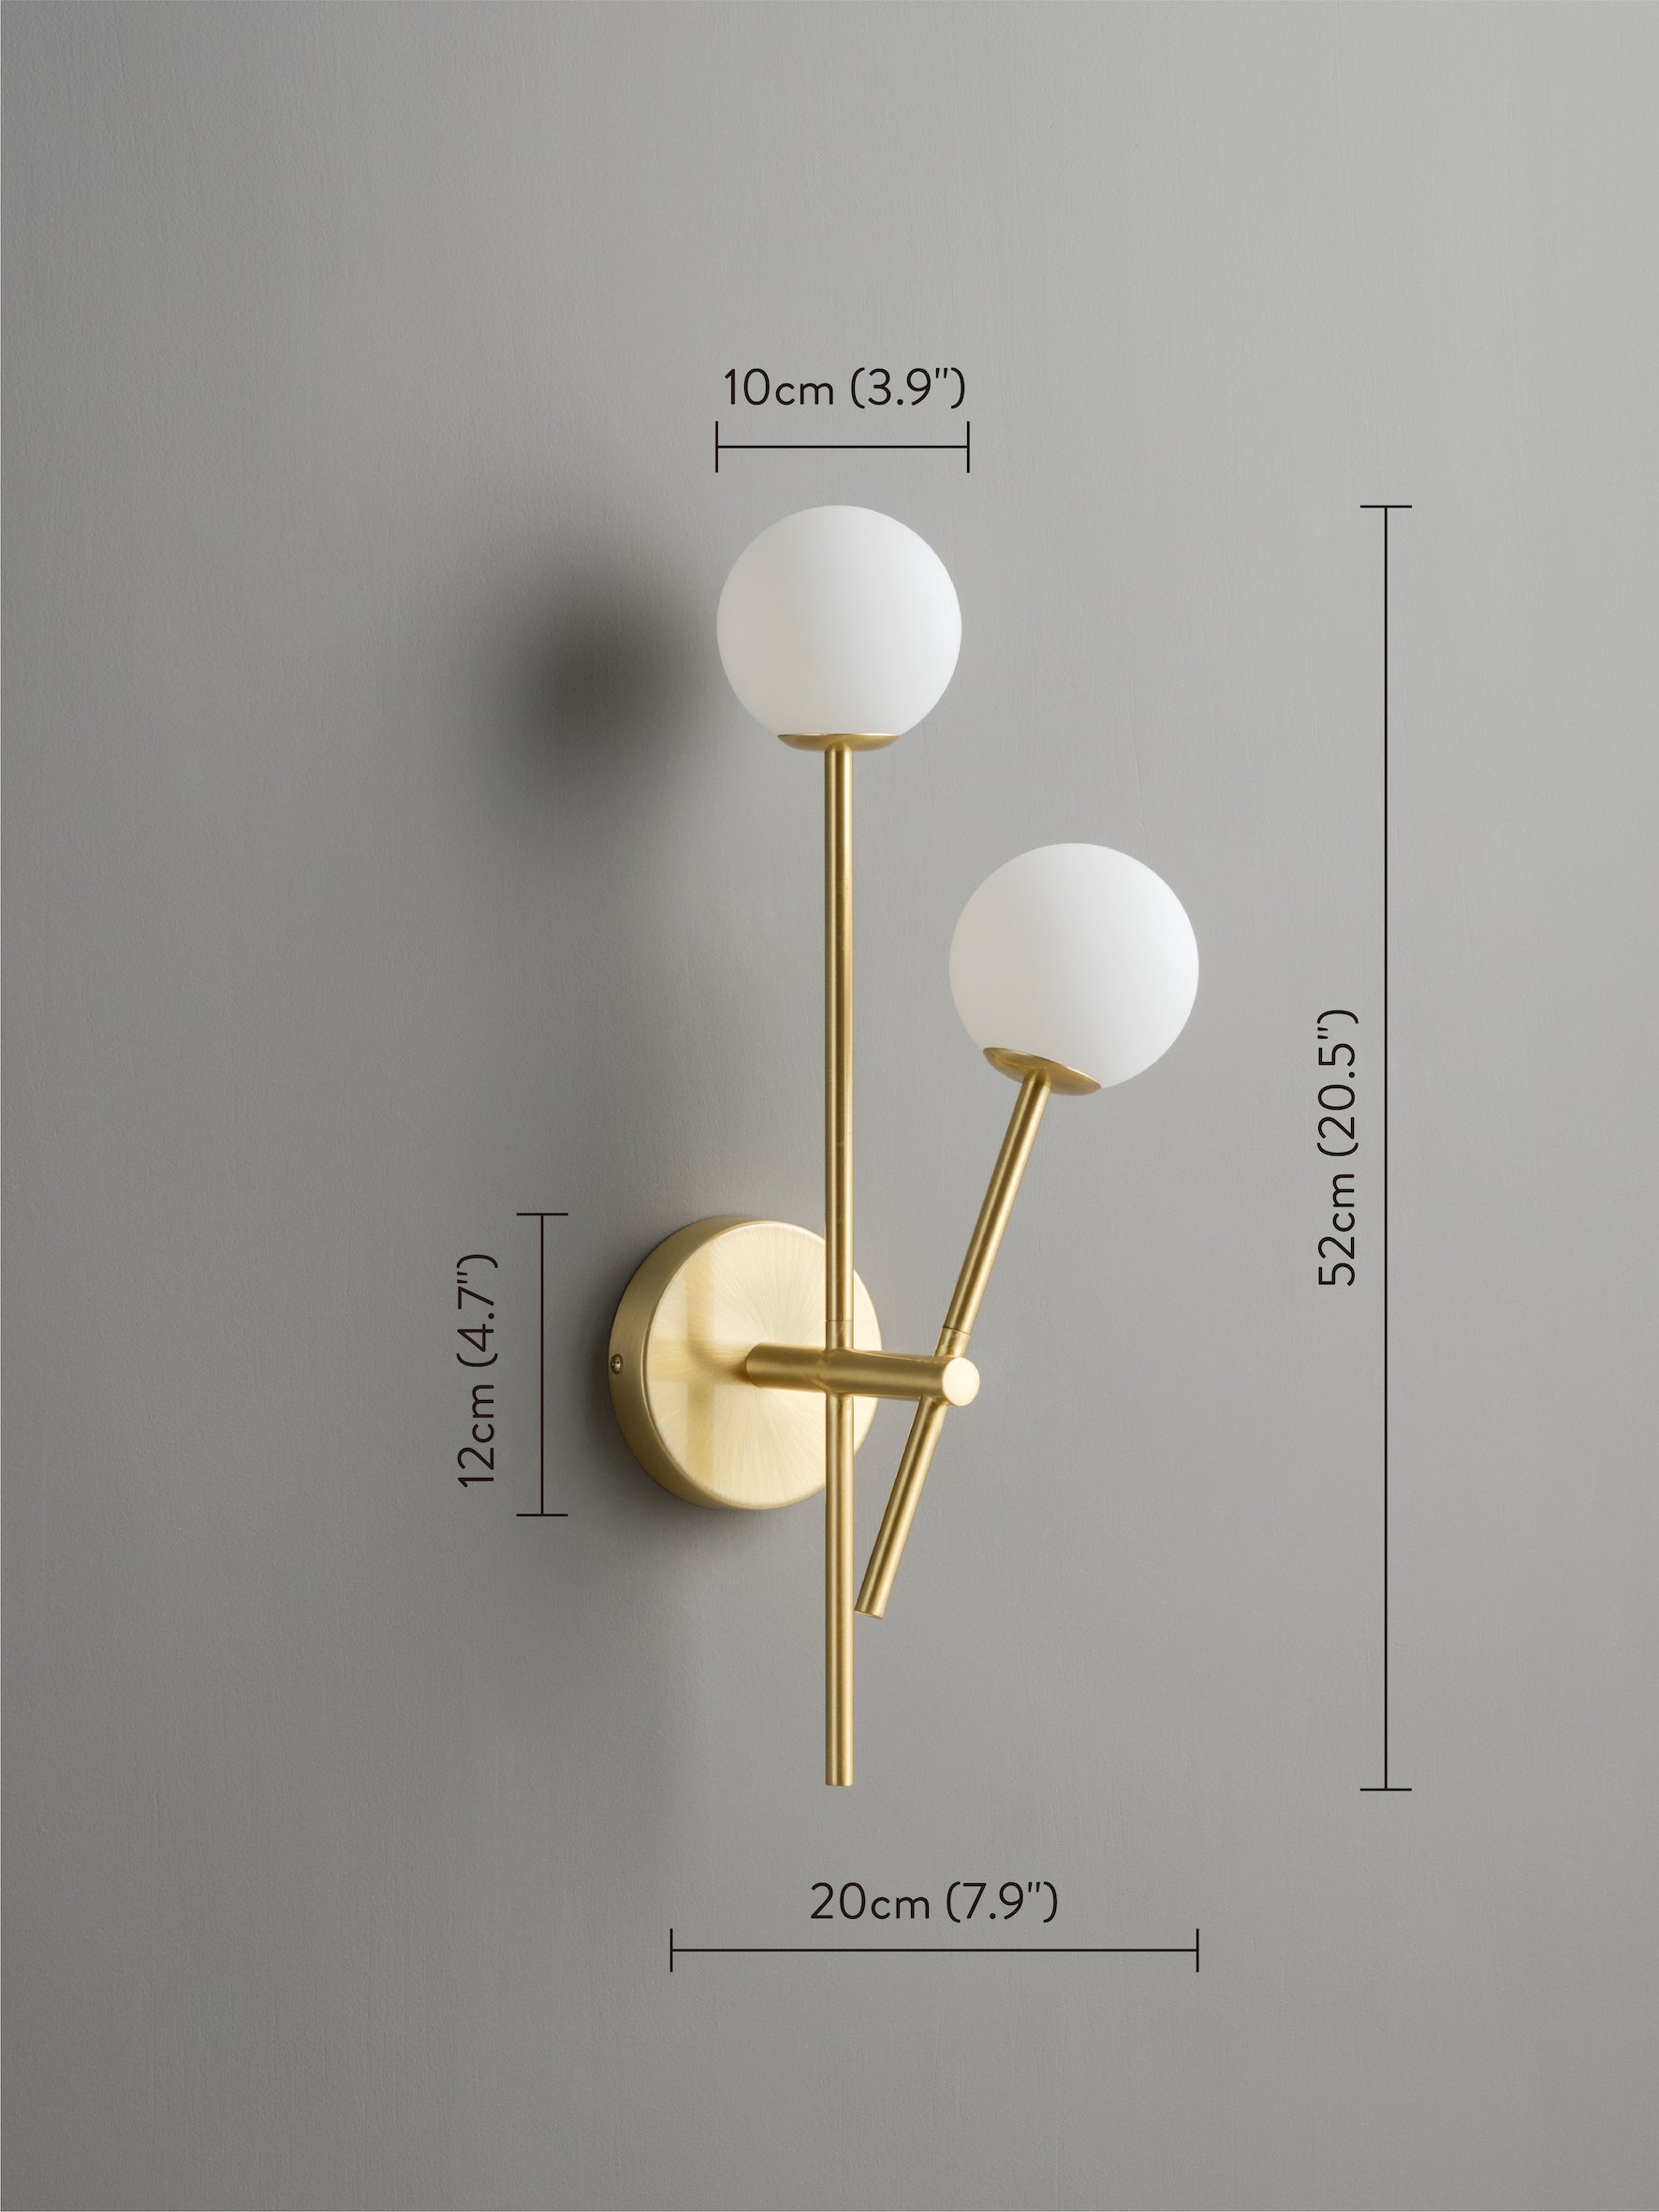 Chelso - 2 light brushed brass and opal wall light | Wall Light | Lights & Lamps | UK | Modern Affordable Designer Lighting